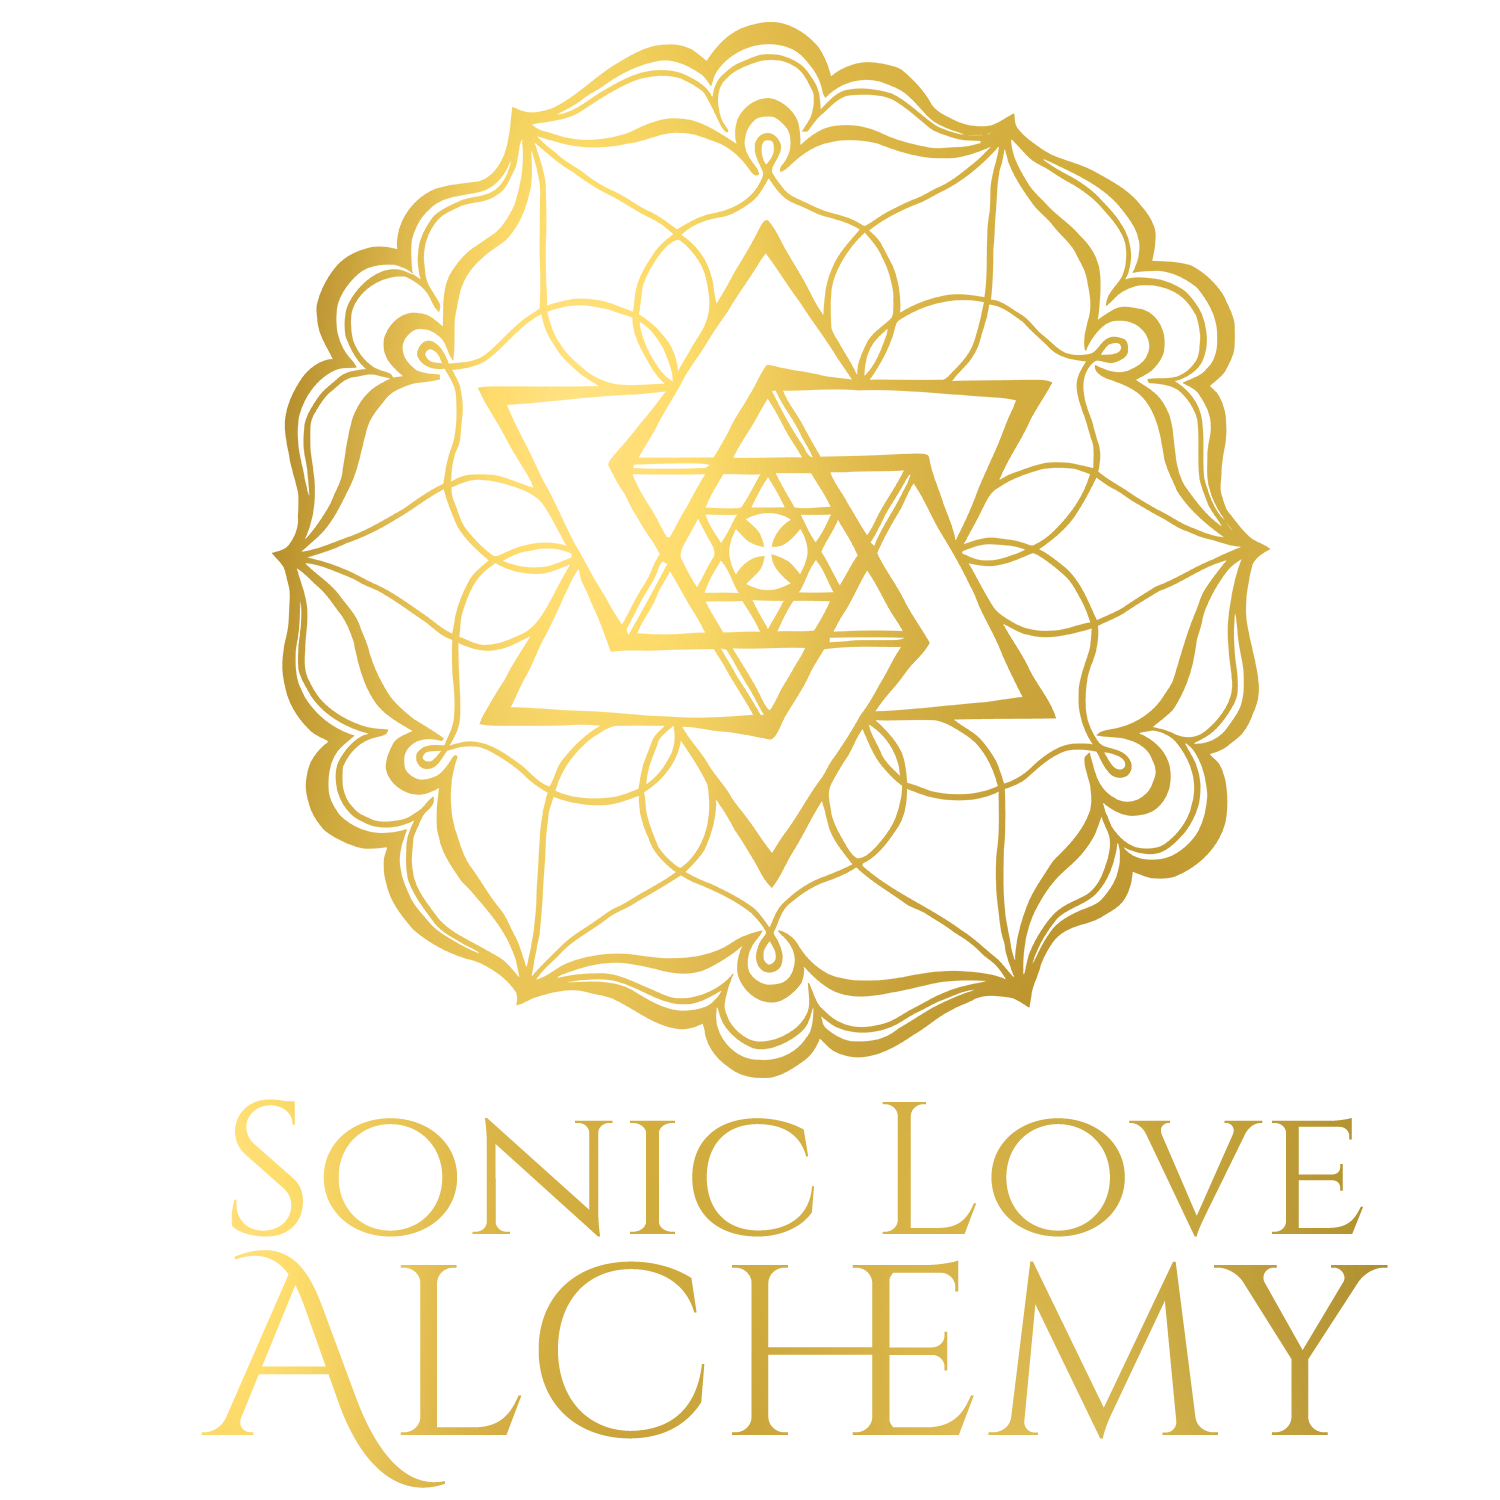 Sonic Bowl Alchemy